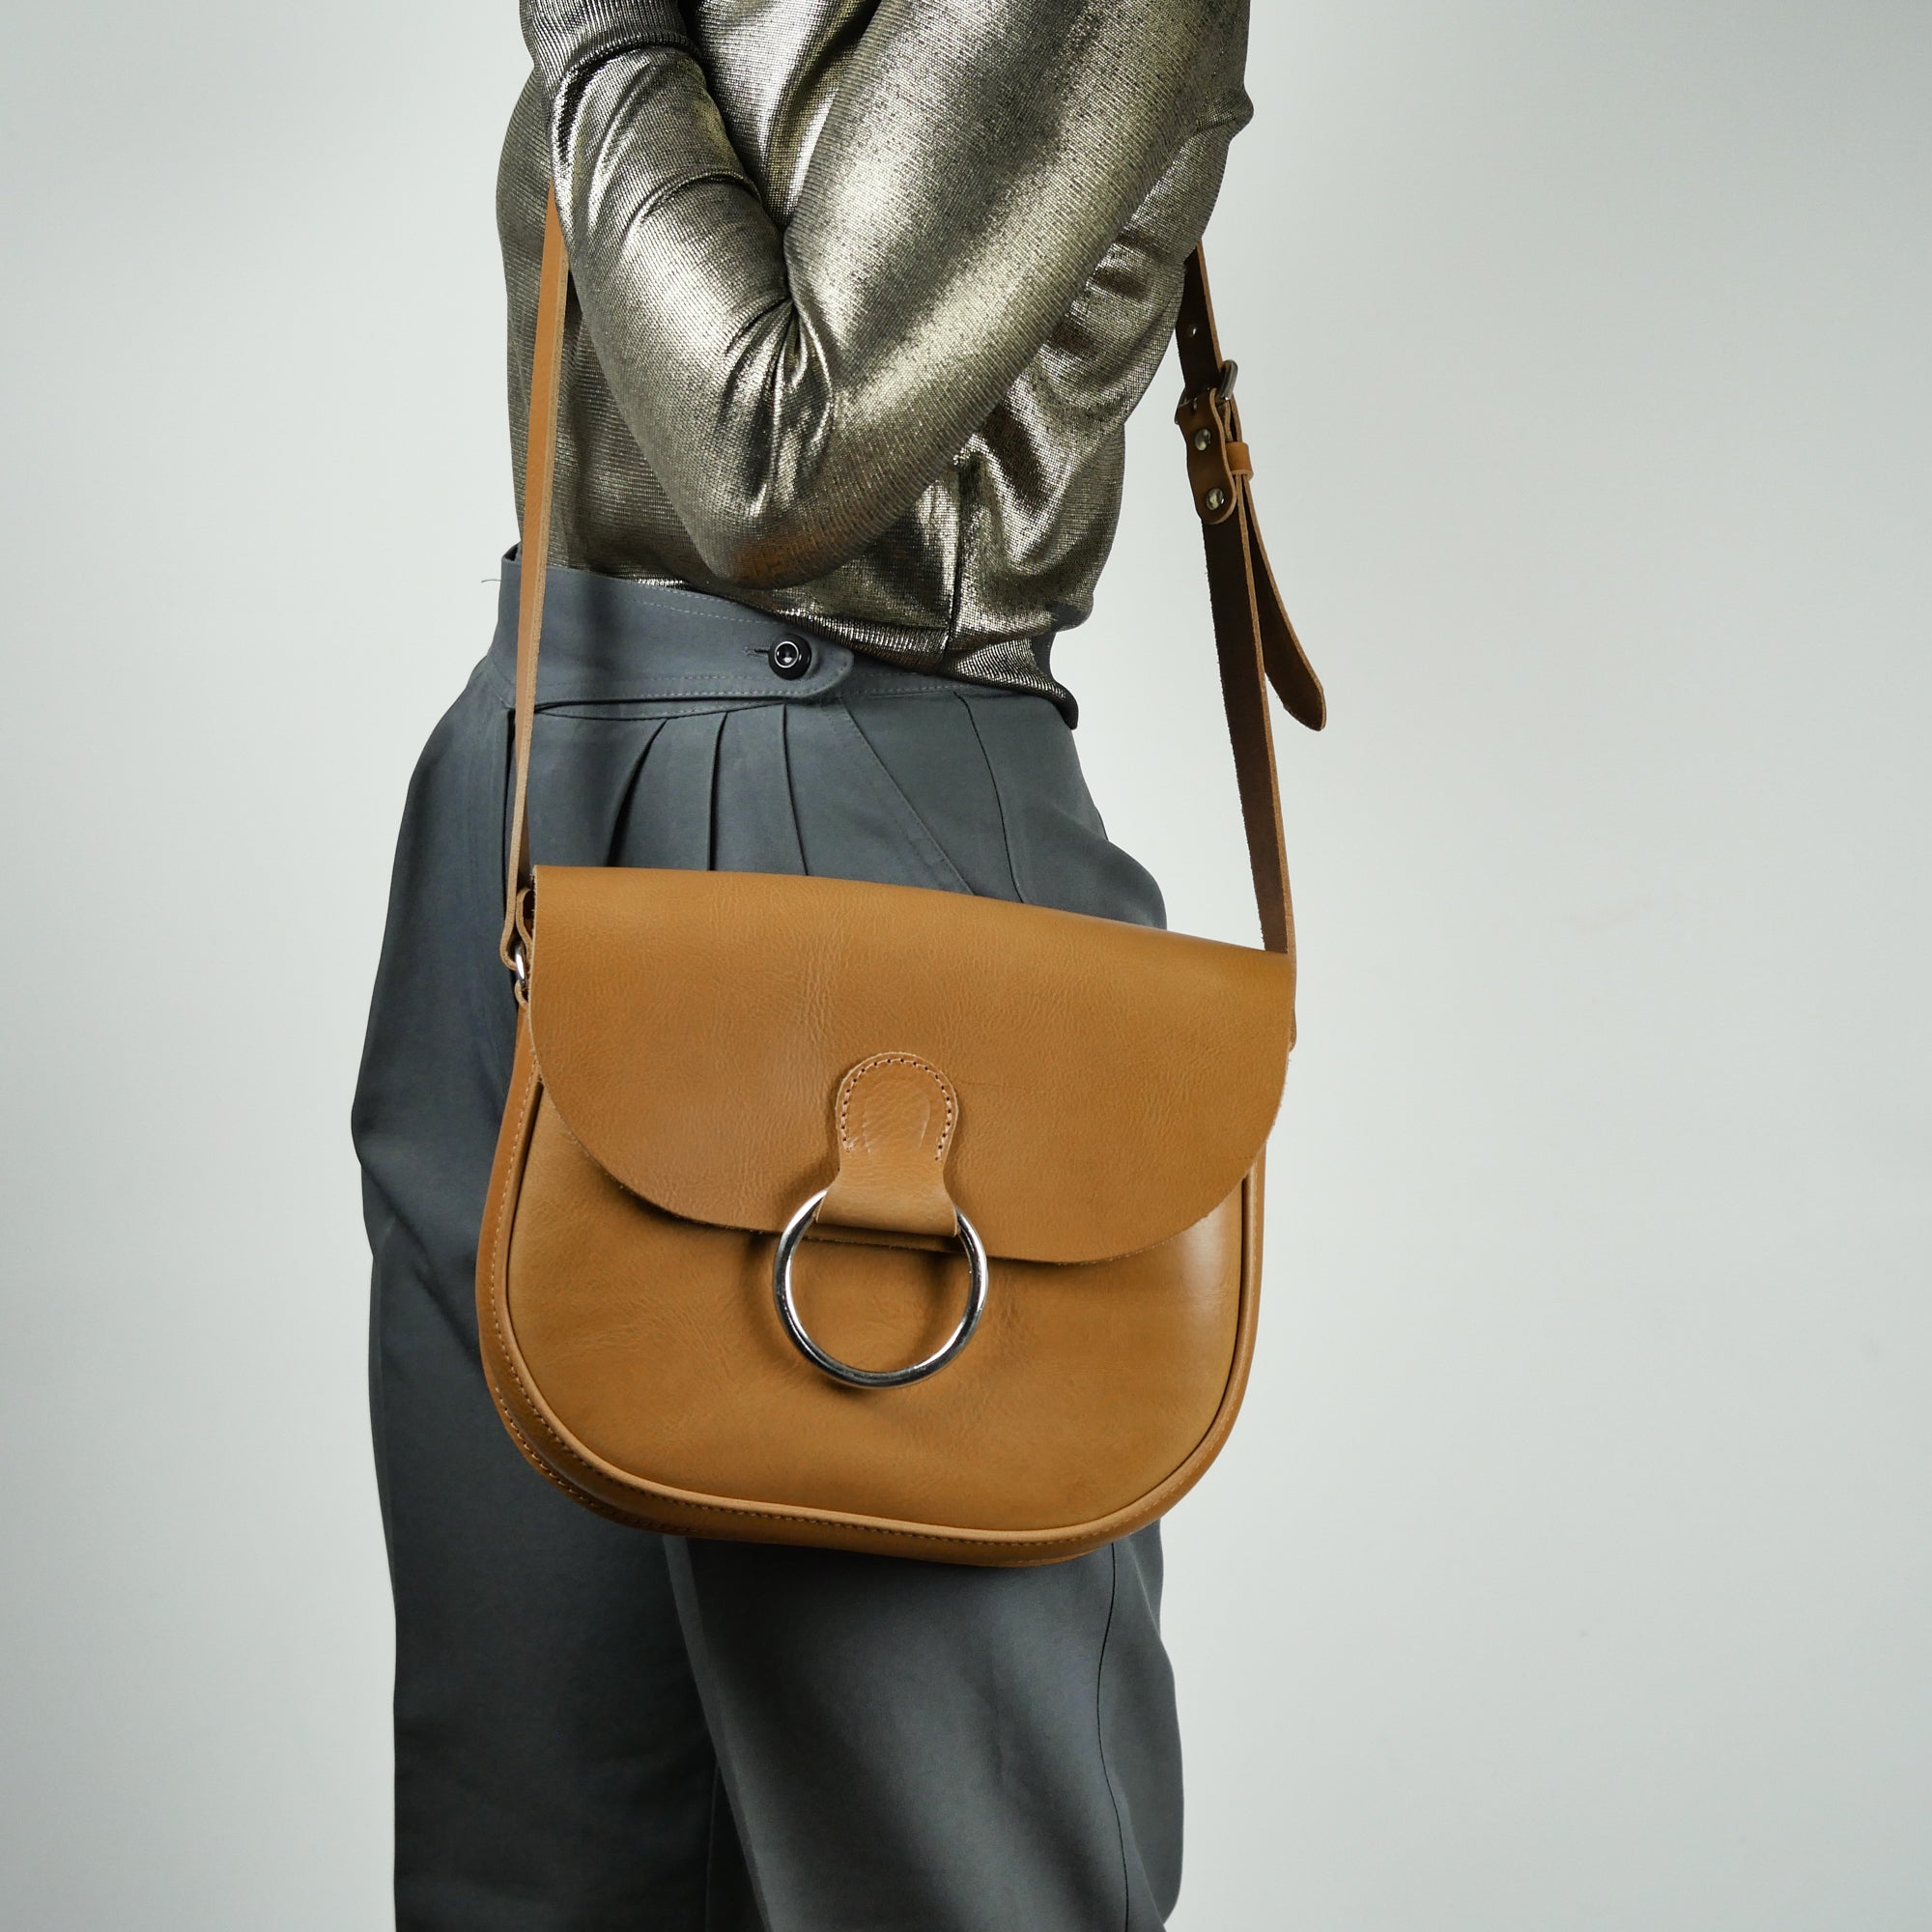 Belle Mustard Tan Leather Crossbody Bag